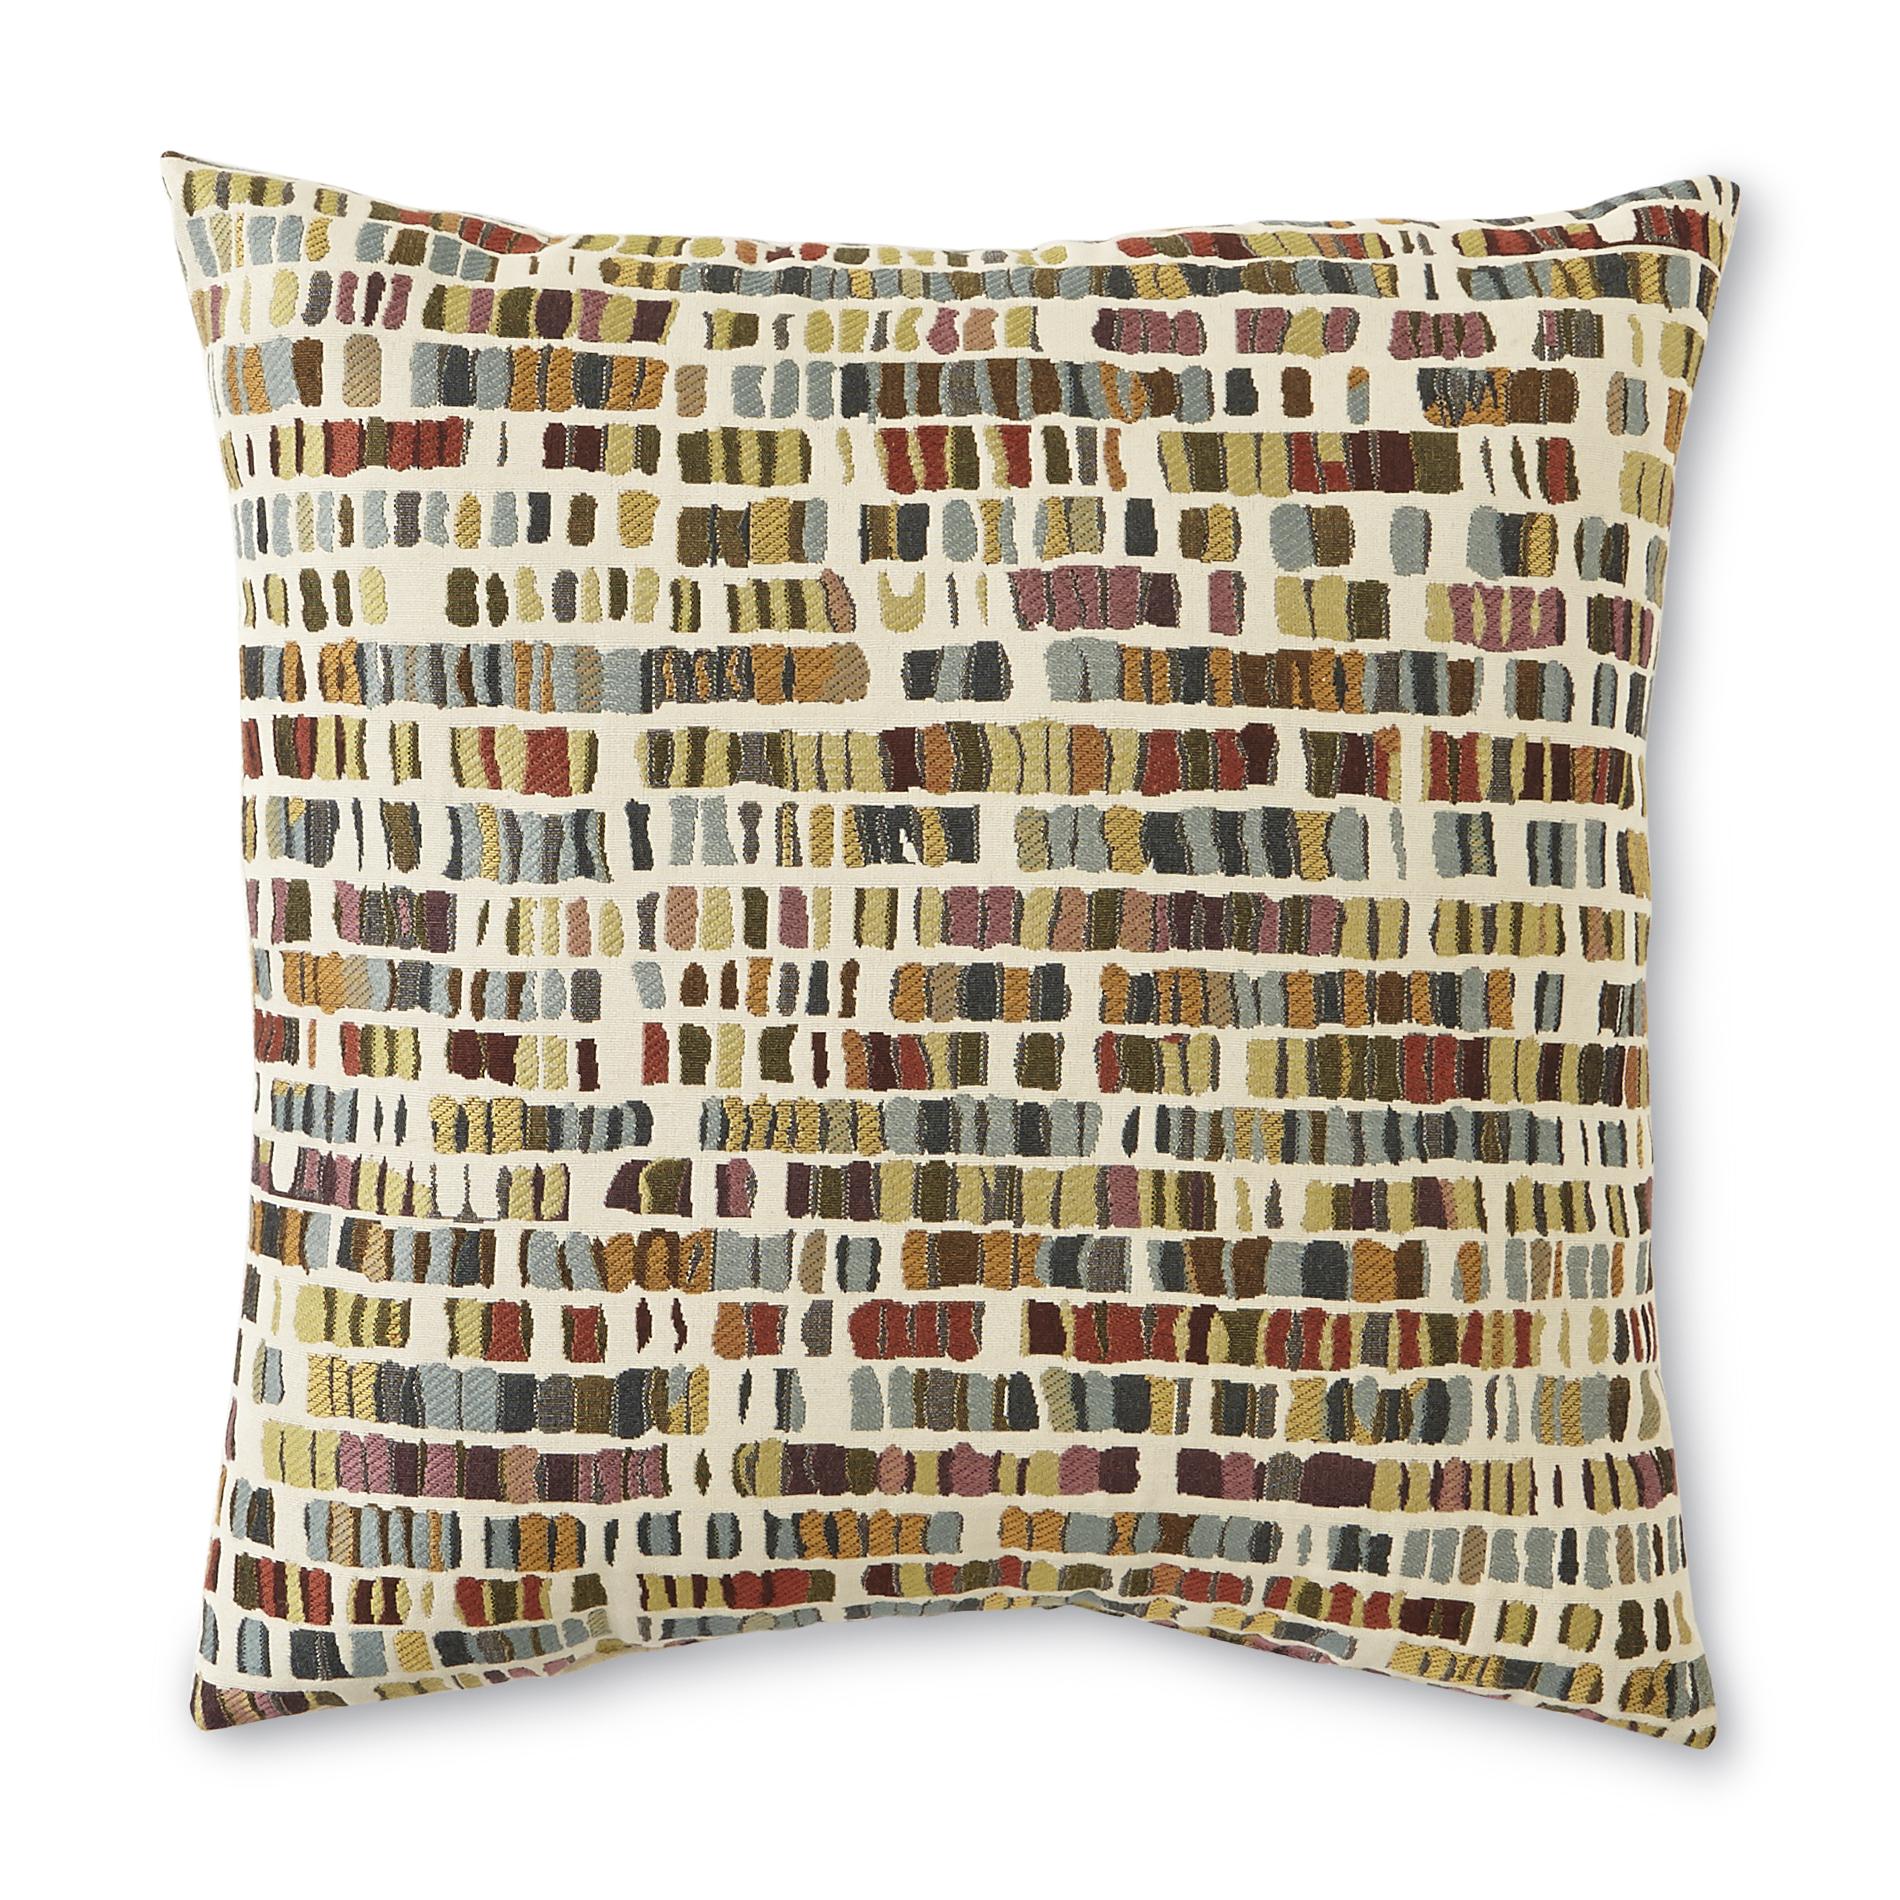 17" x 17" Decorative Throw Pillow - Multicolor Bedrock